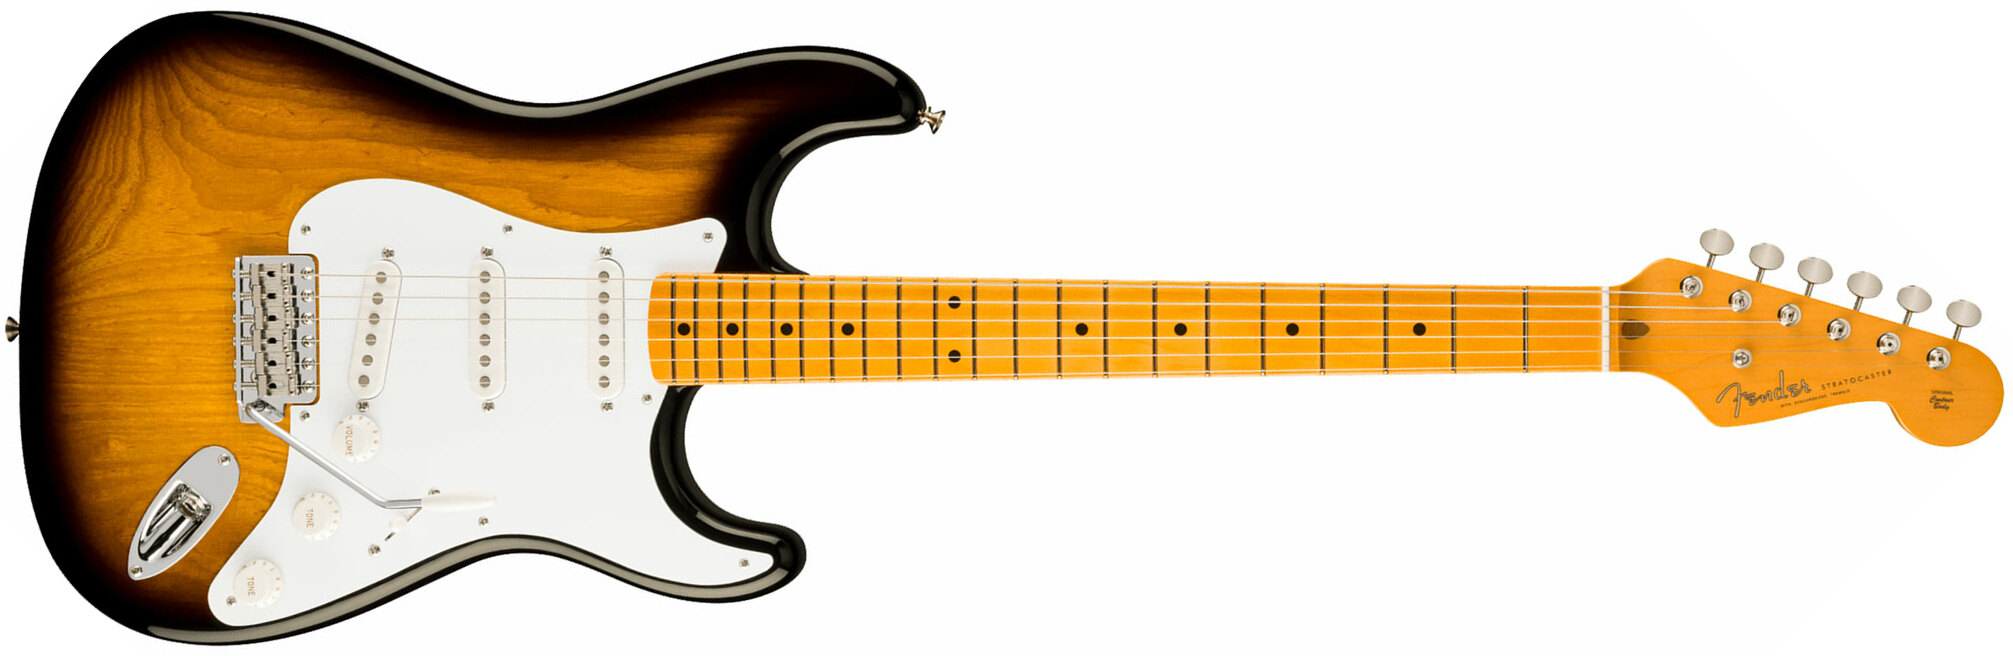 Fender Strat 1954 70th Anniversary American Vintage Ii Ltd Usa 3s Trem Mn - 2-color Sunburst - Str shape electric guitar - Main picture